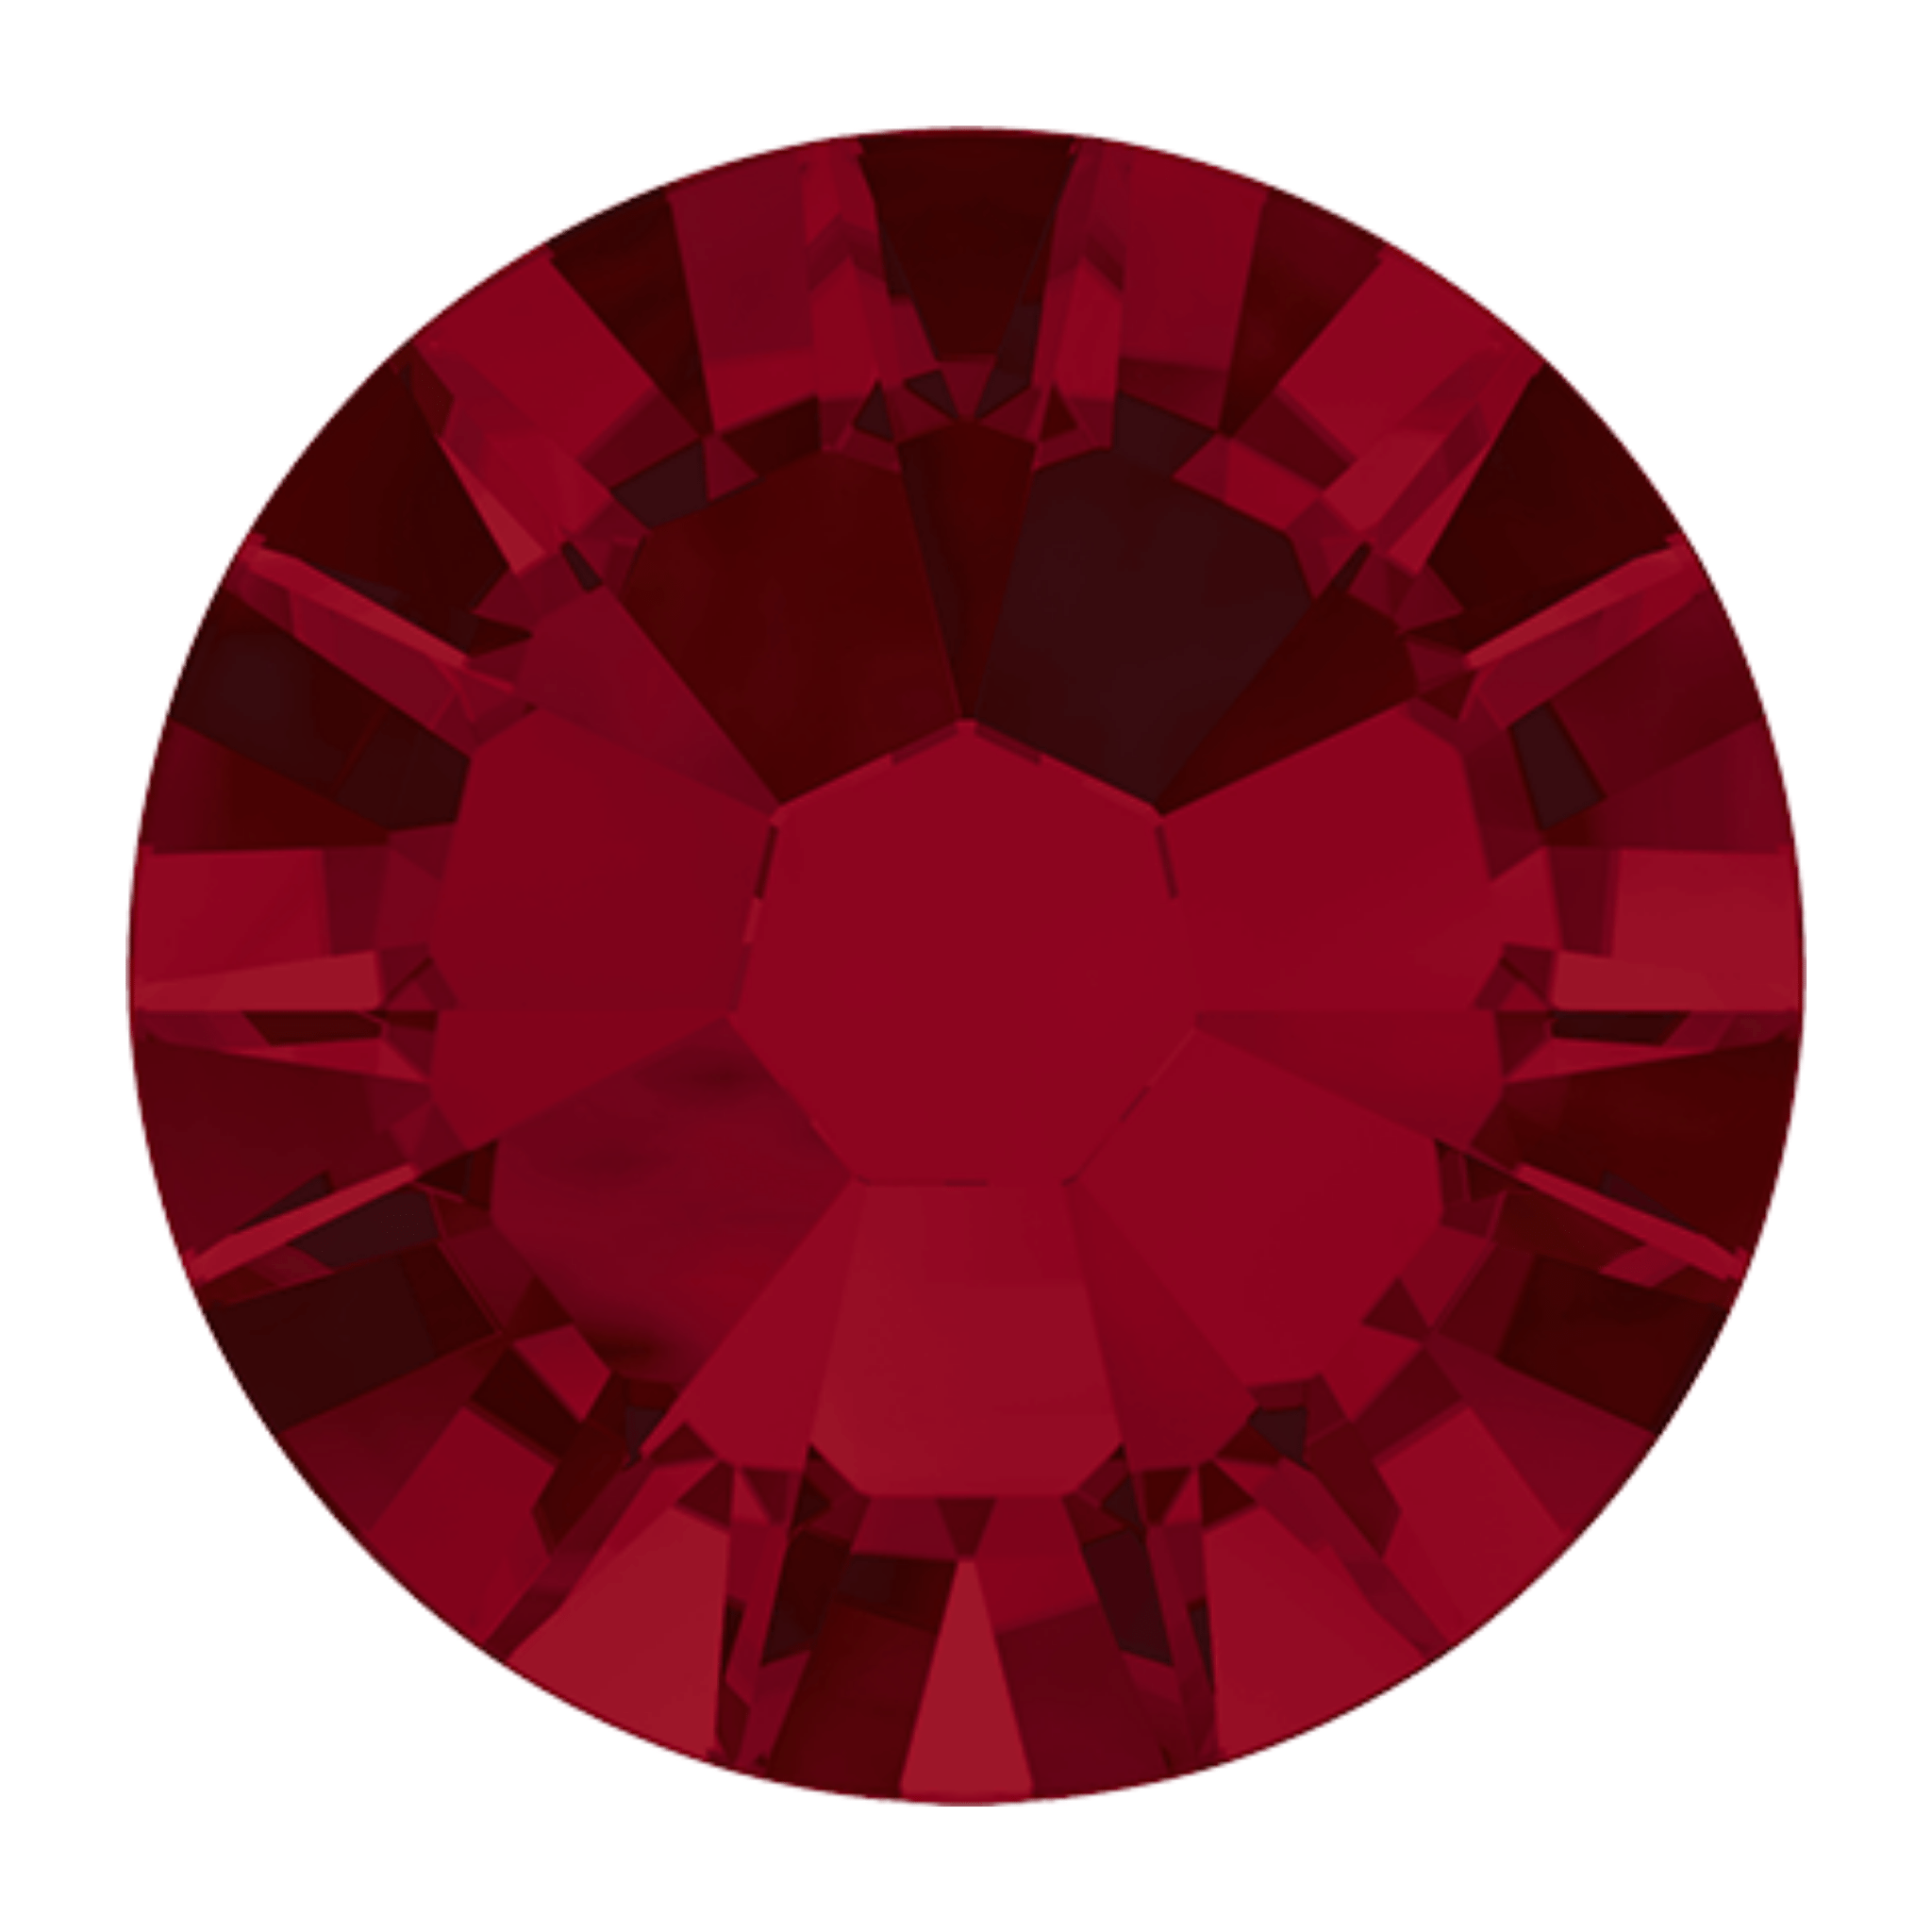 SWAROVSKI SS7 Siam Red 2058 Xirius Rose Flatback Foiled Crystals - 1440pcs - American Deadstock